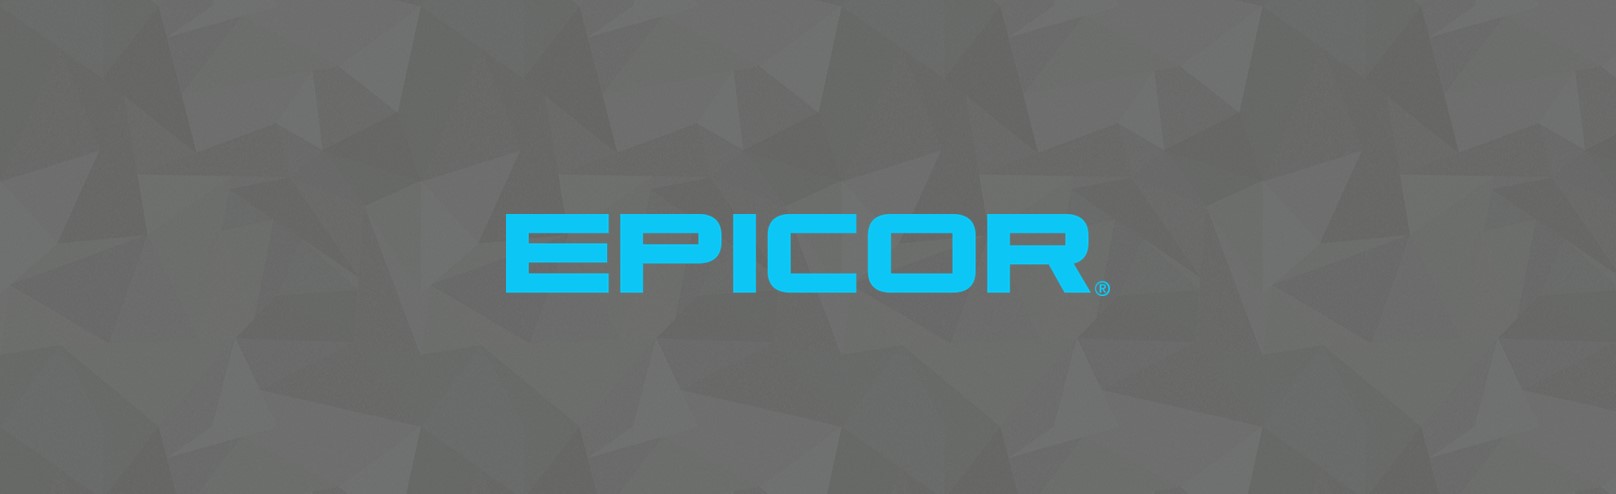 Command Center Spotlight | Epicor